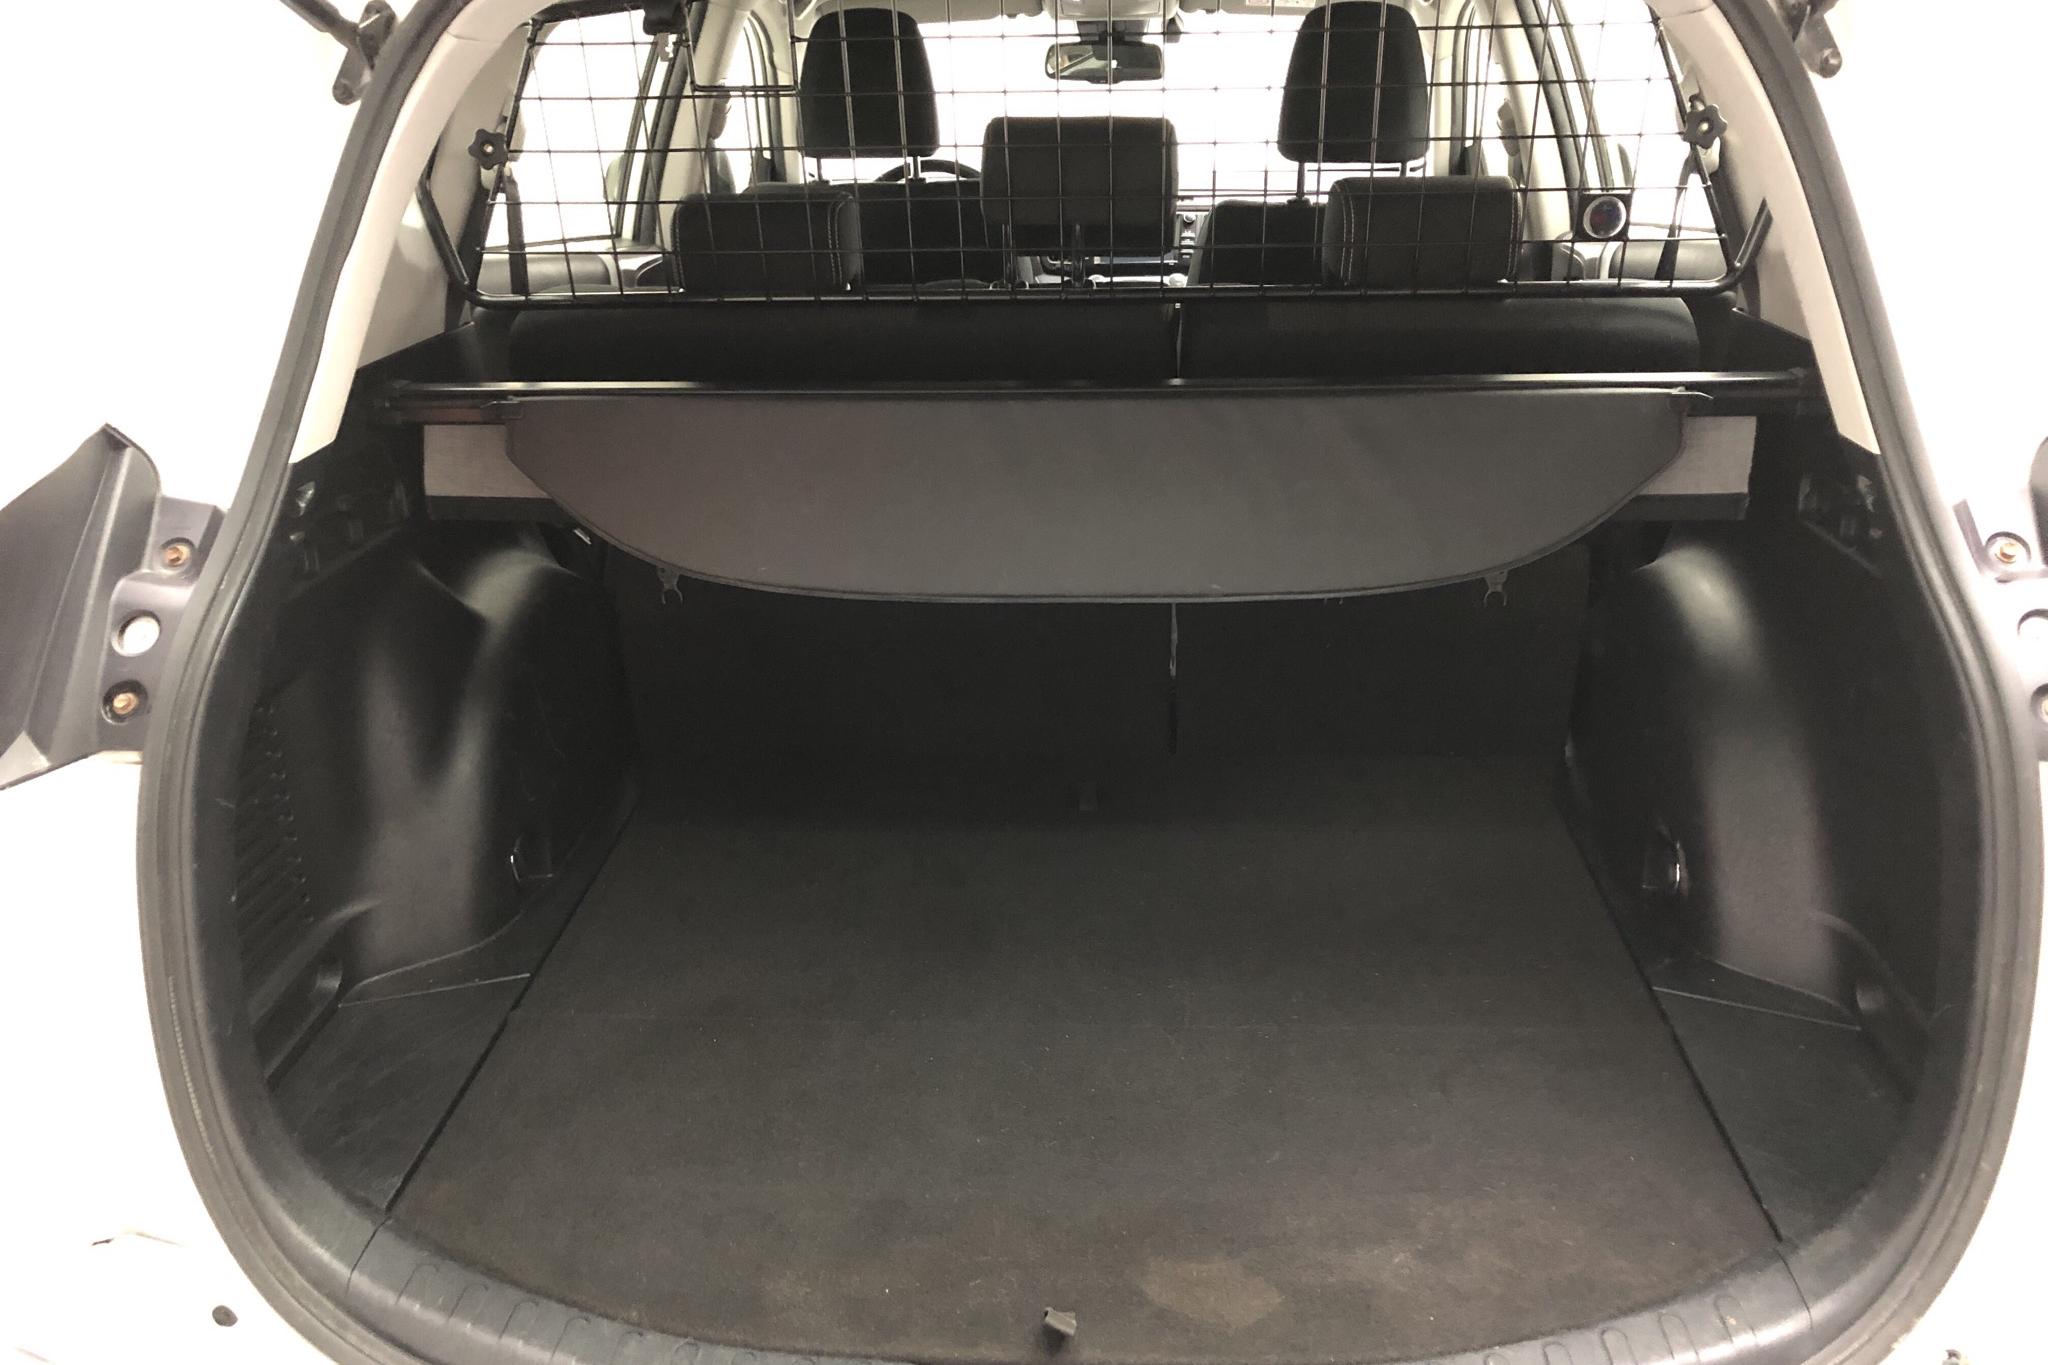 Toyota RAV4 2.0 VVT-i AWD (151hk) - 105 530 km - Manual - white - 2017